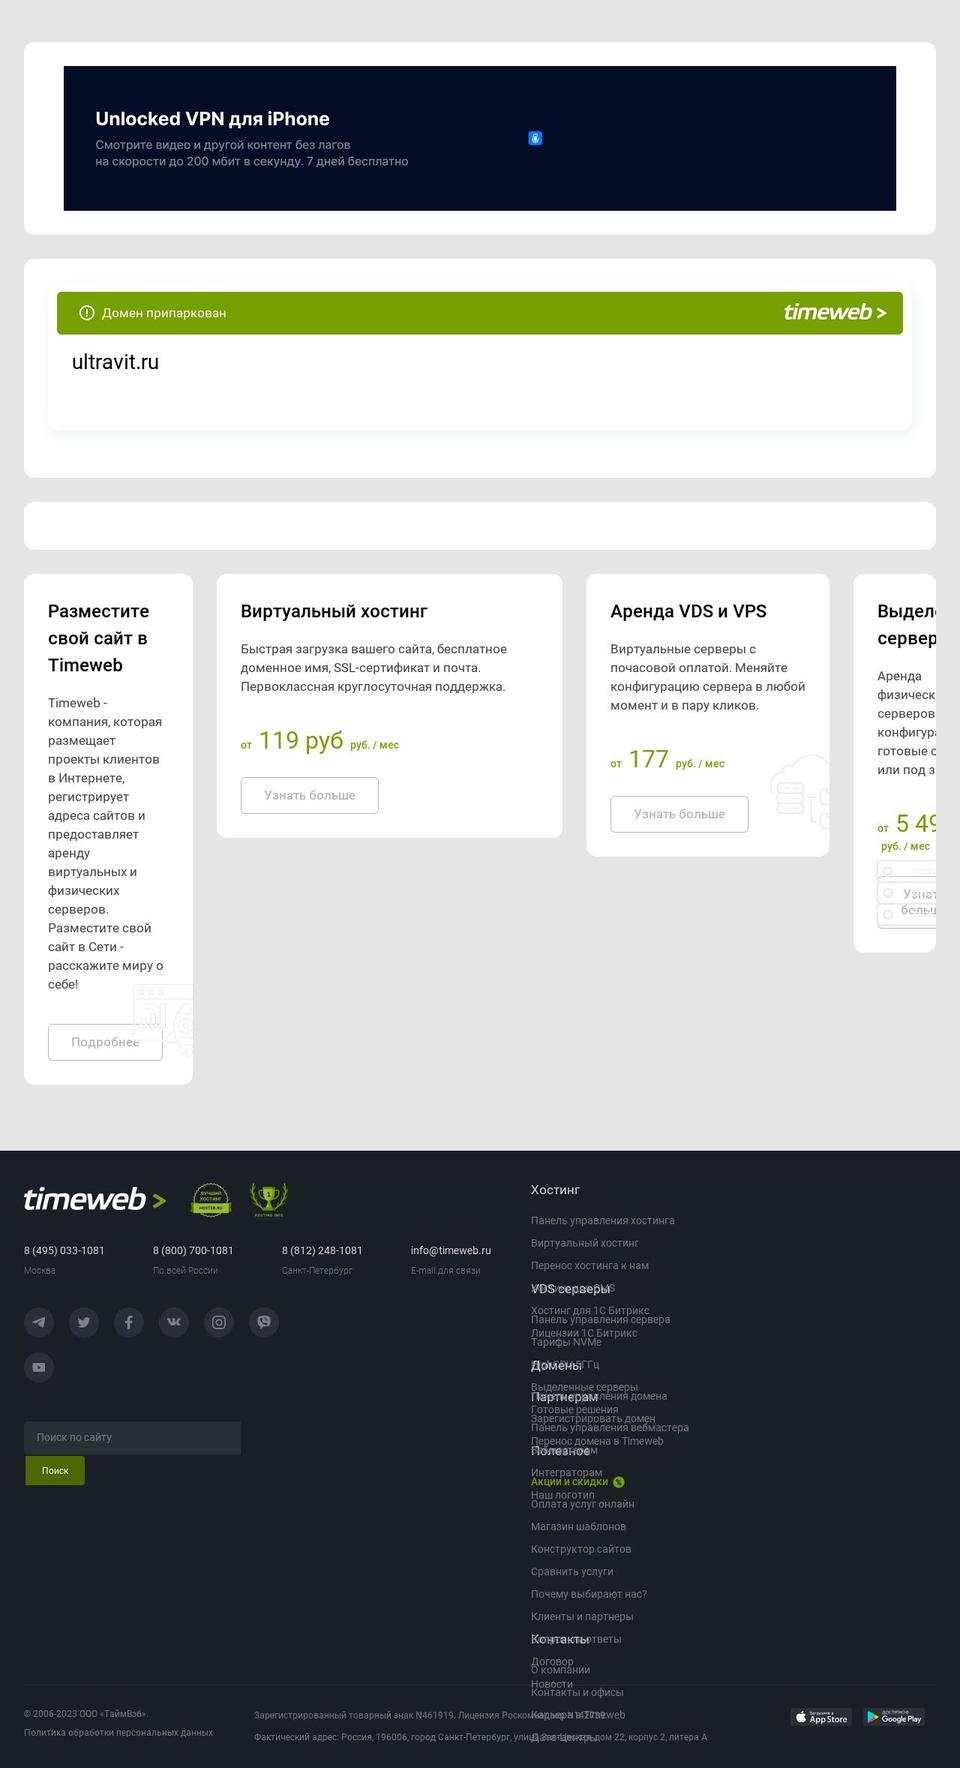 ultravit.ru shopify website screenshot